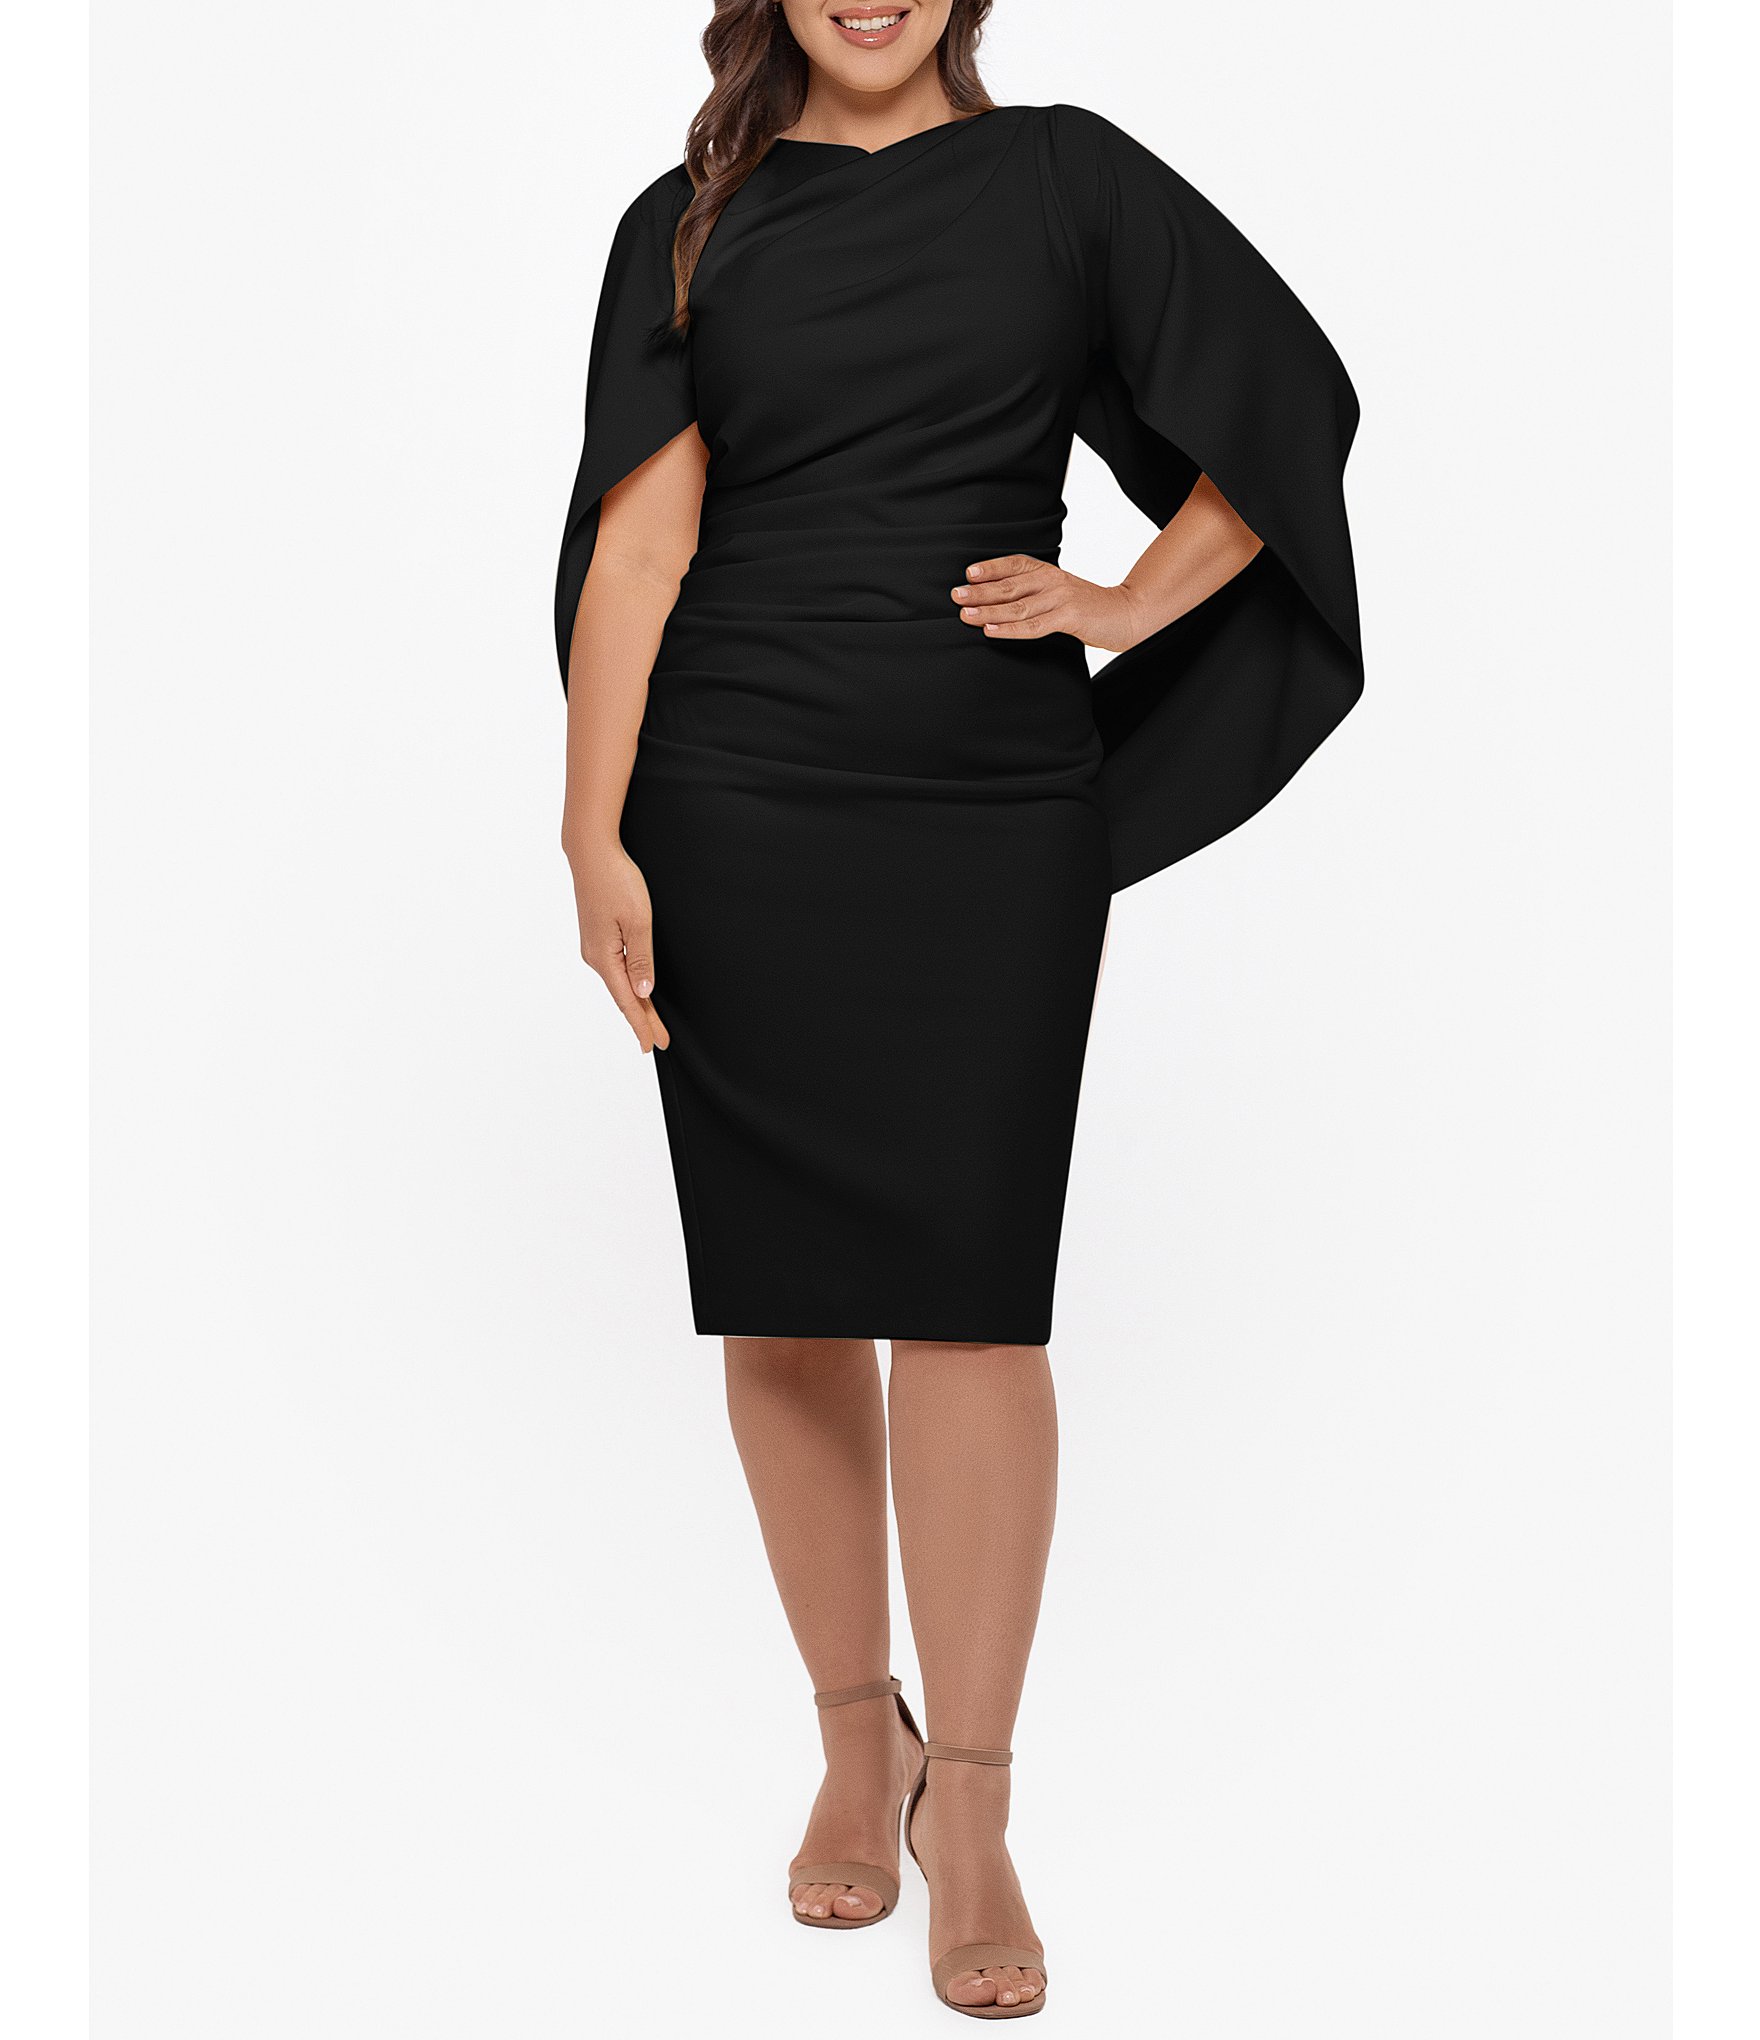 black formal dresses: Women's Plus Size Clothing